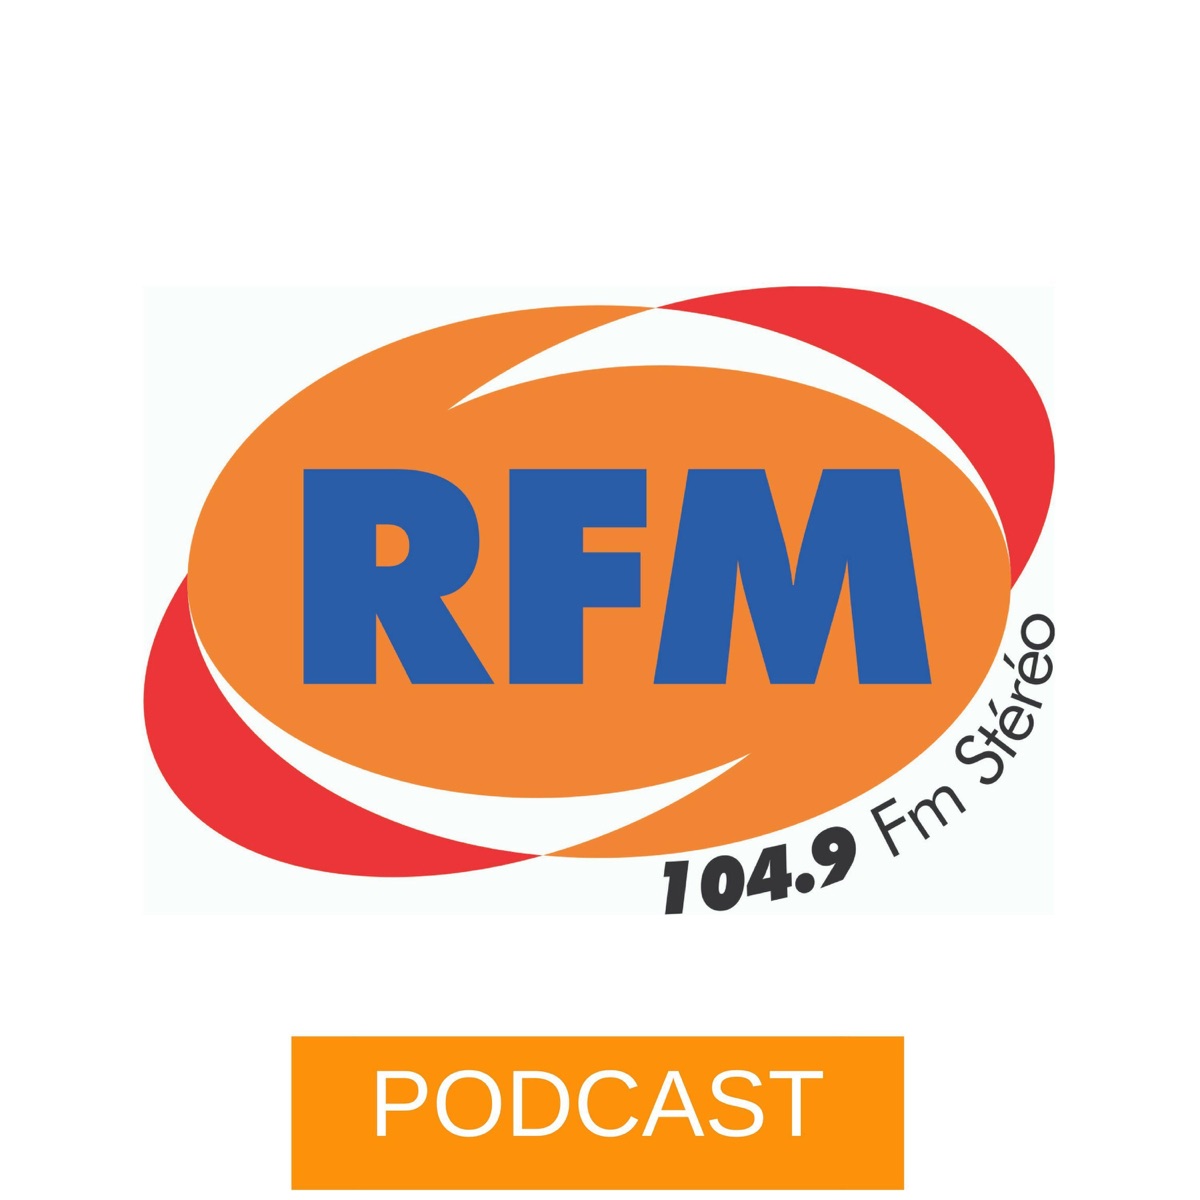 Radio RFM 104.9 FM – Podcast – Podtail